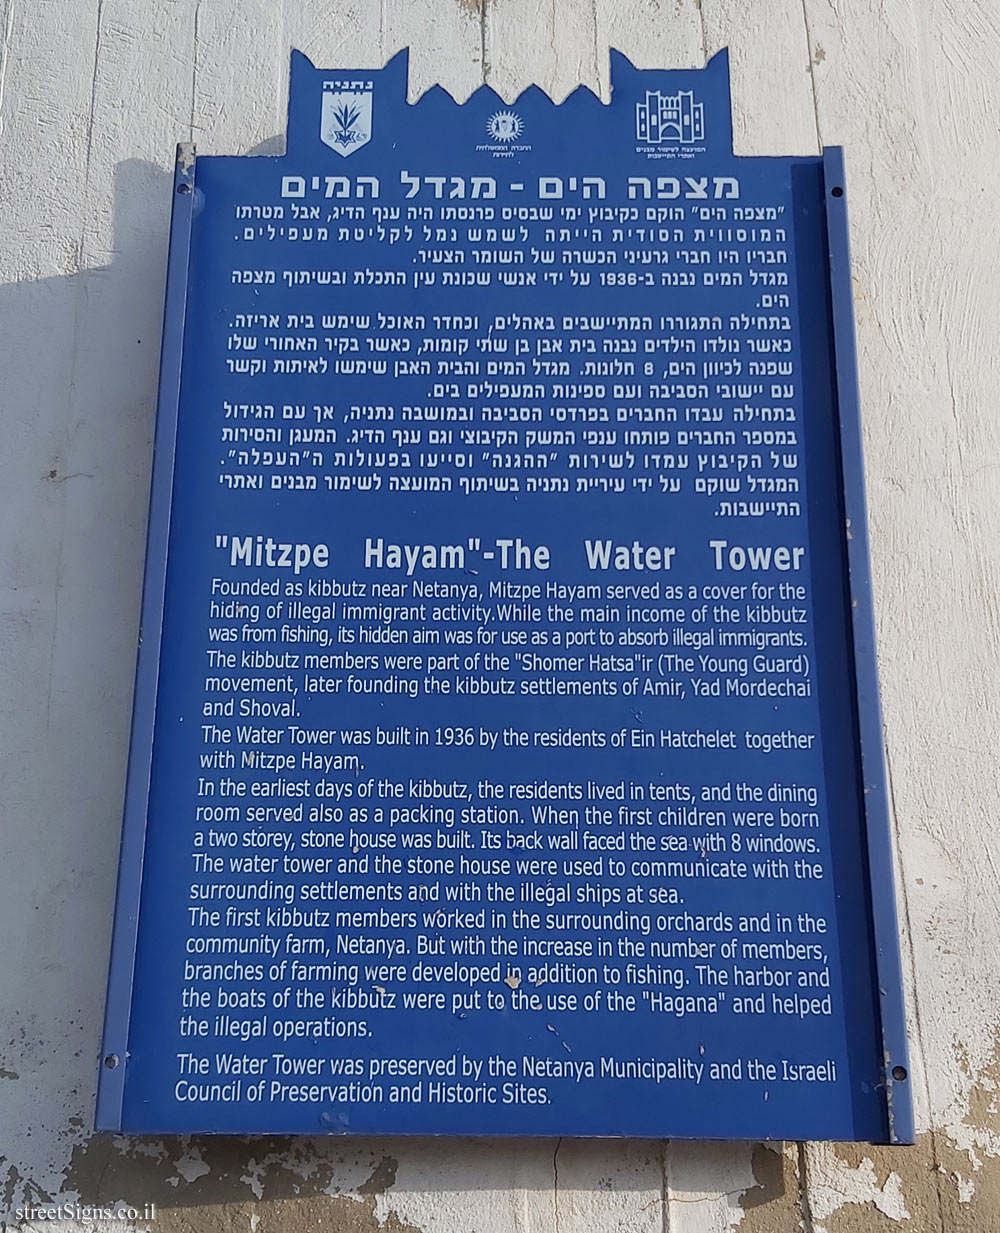 Netanya - Heritage Sites in Israel - "Mitzpe Hayam" - The Water Tower